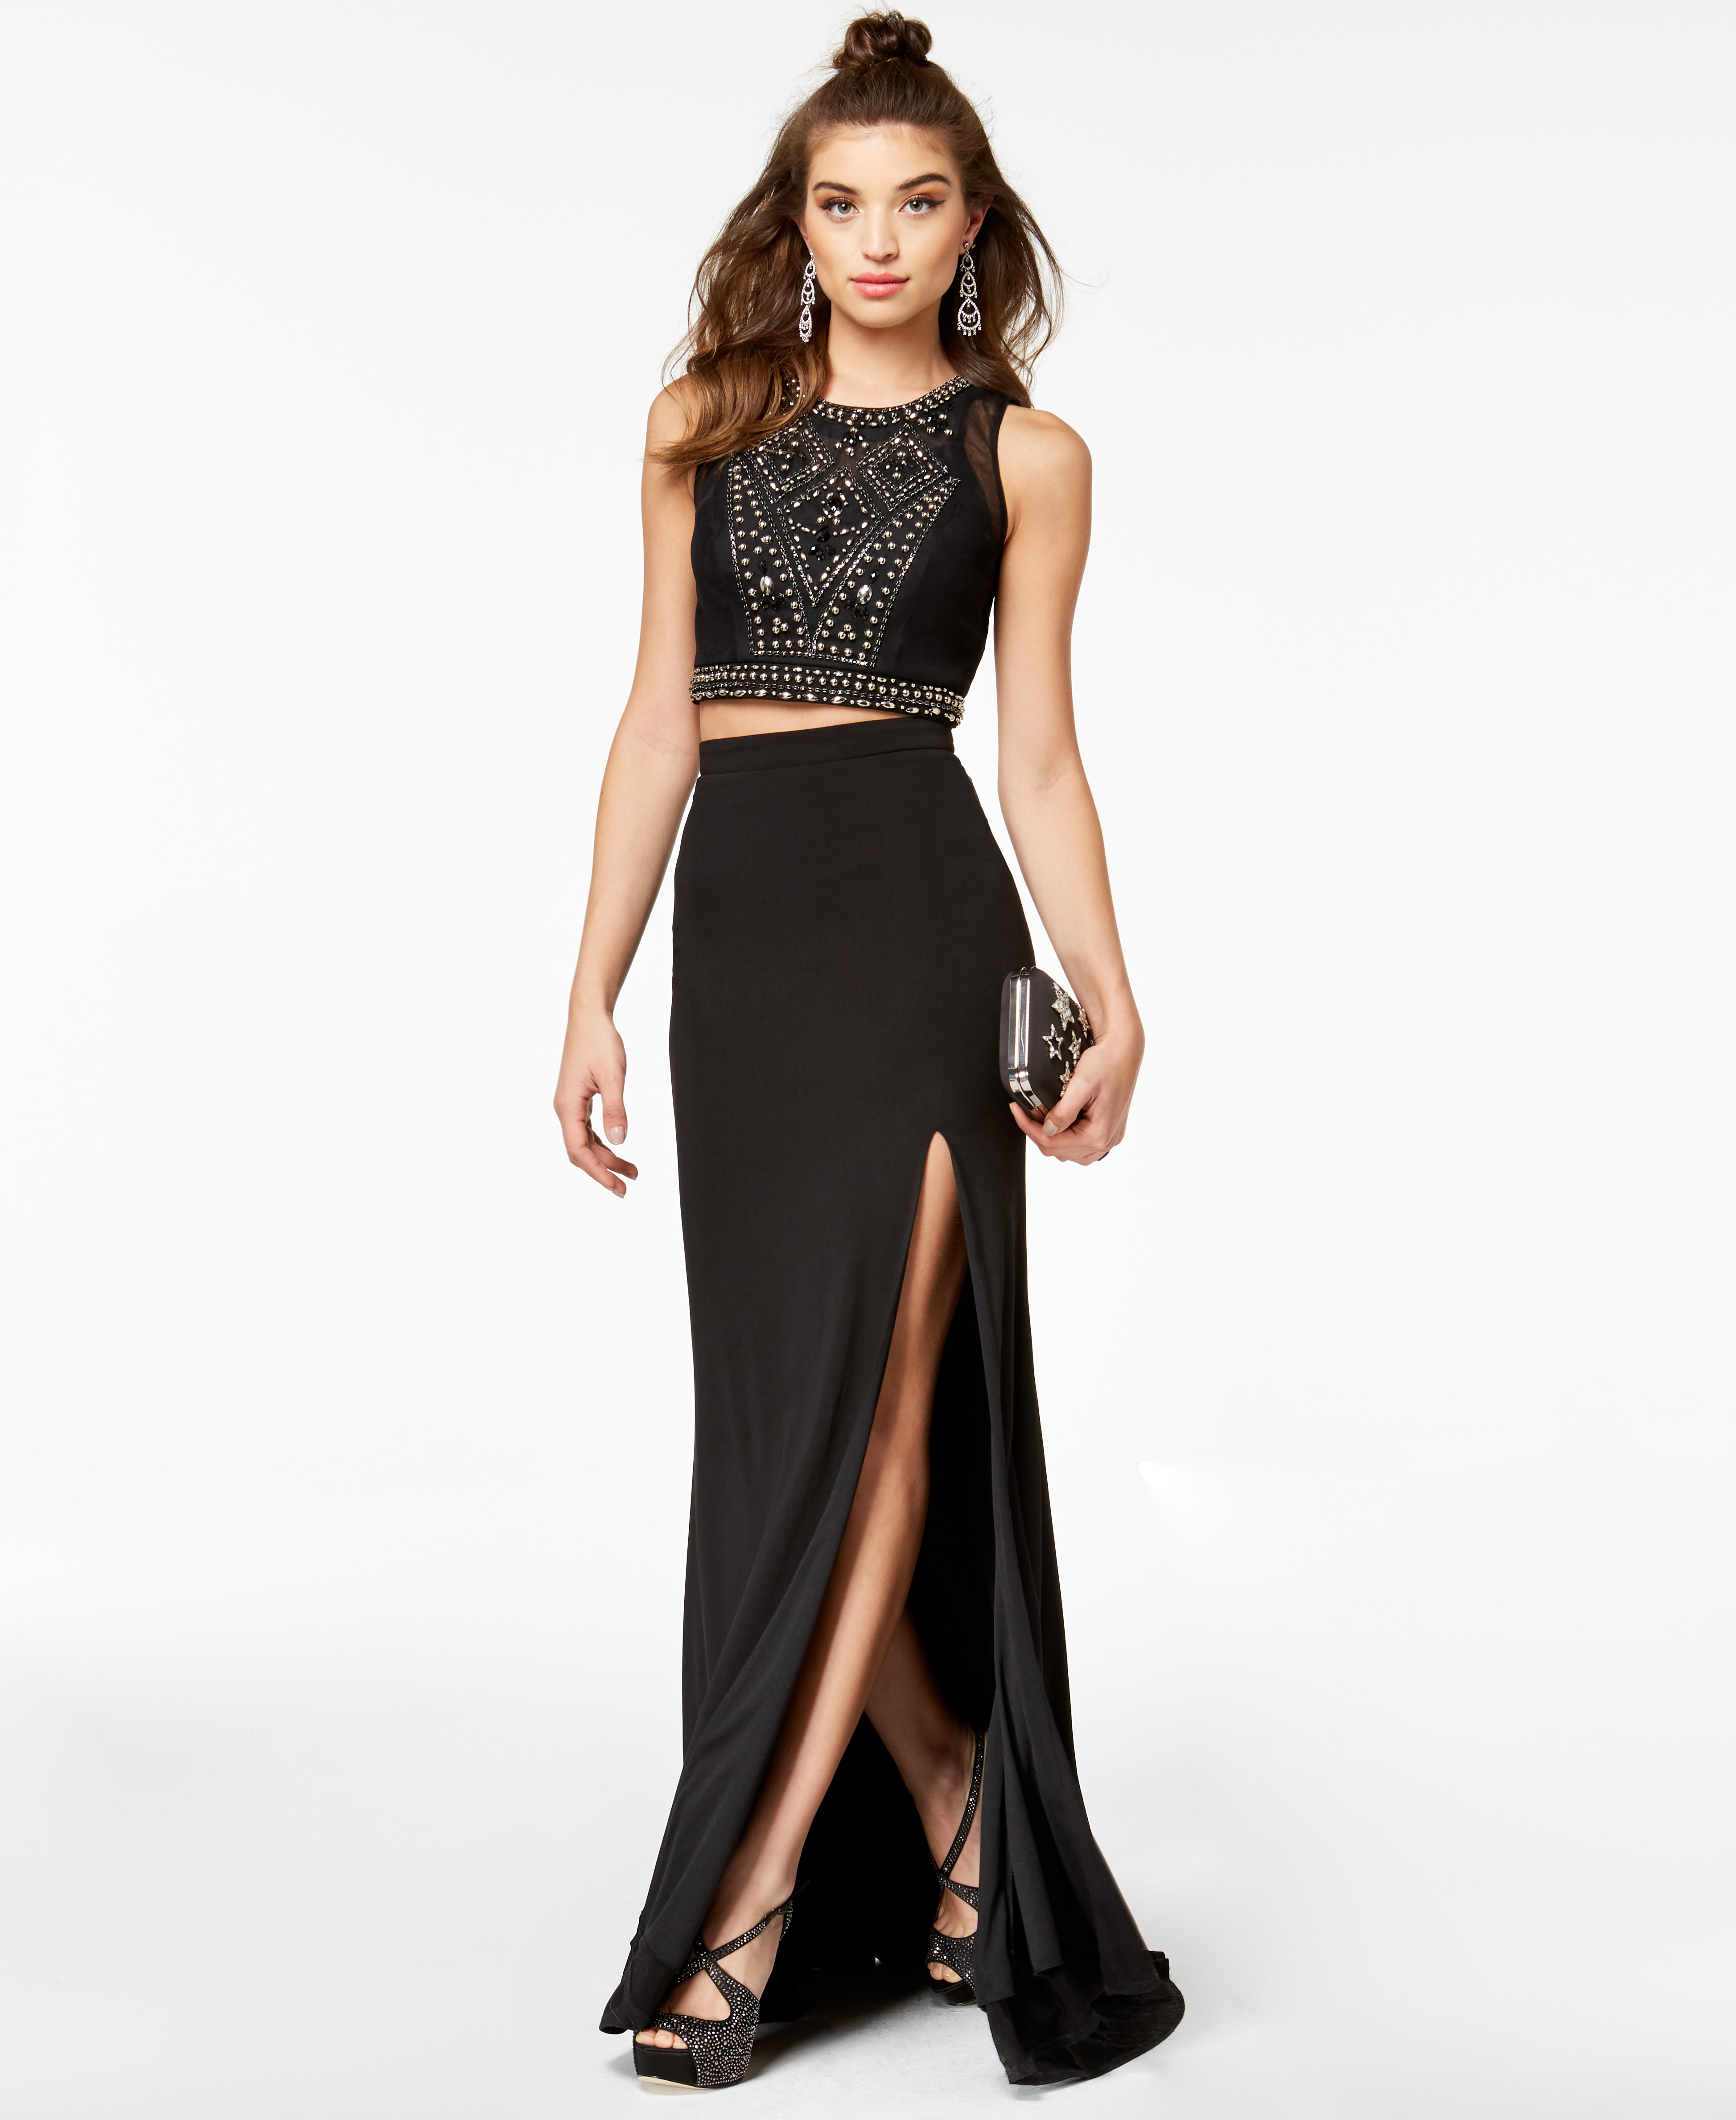 macy’s formal dresses for weddings Dresses Images 2022